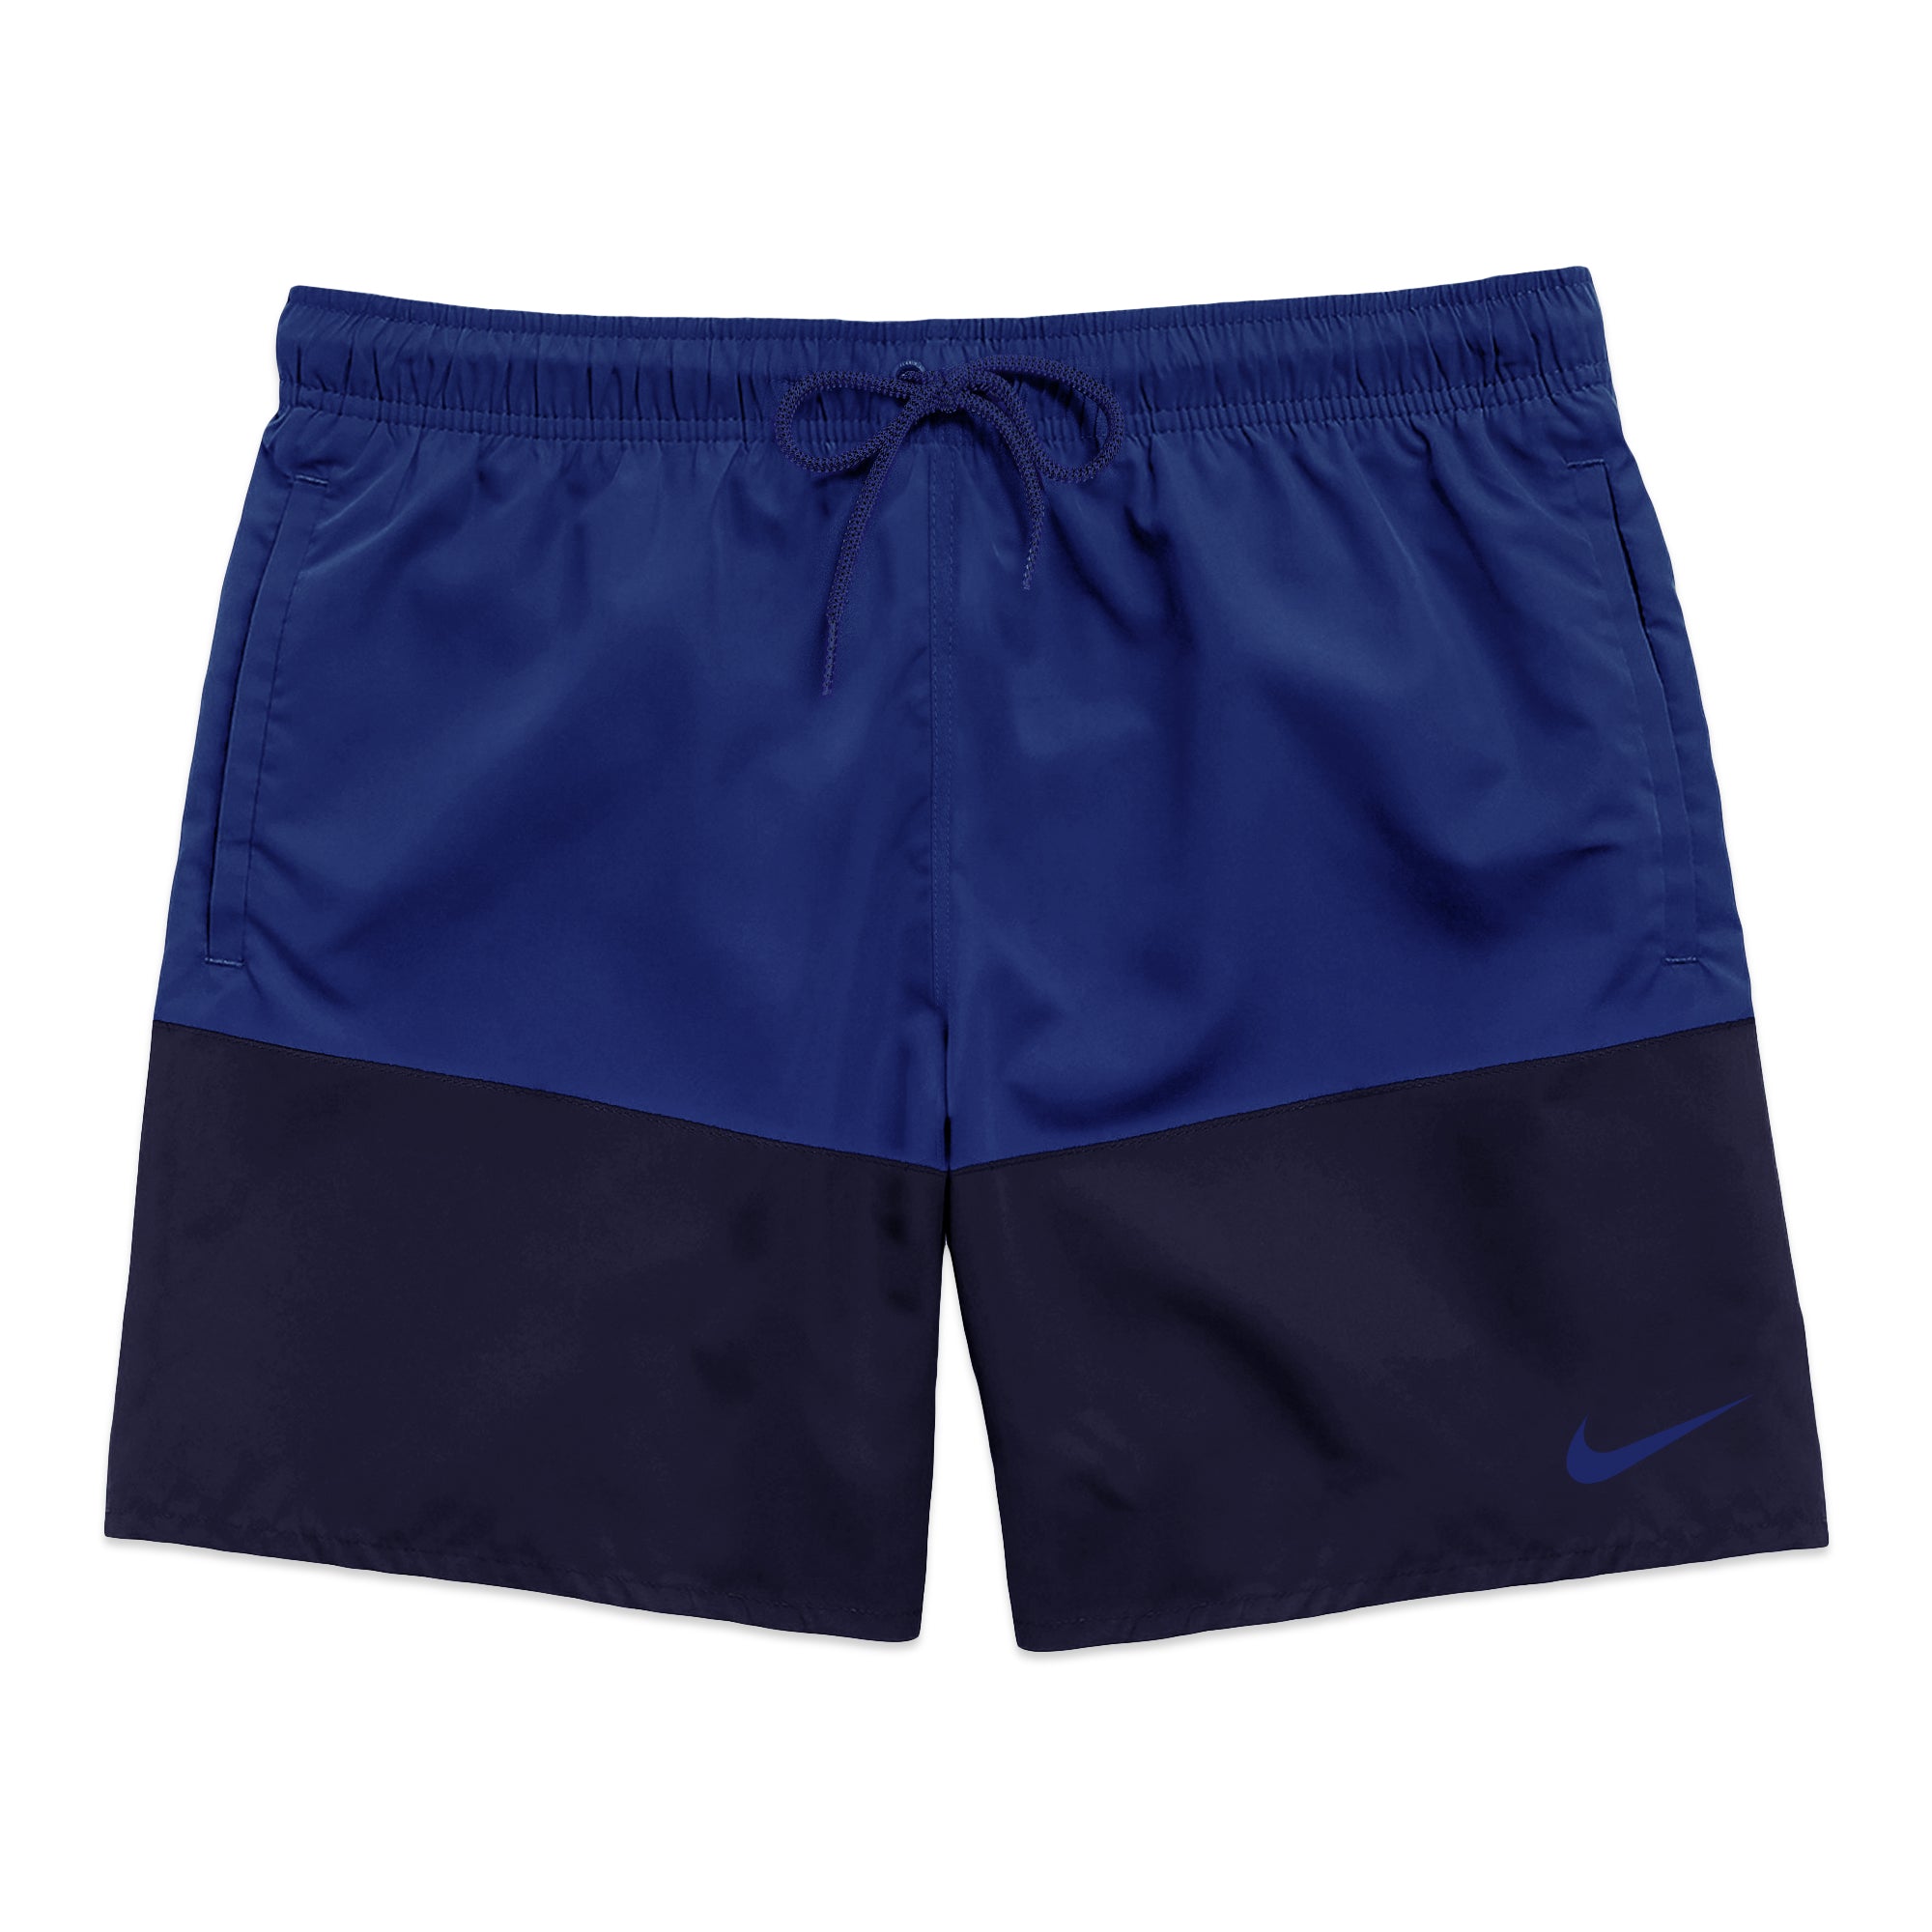 Nike Split Panel Swim Shorts - Navy/Royal